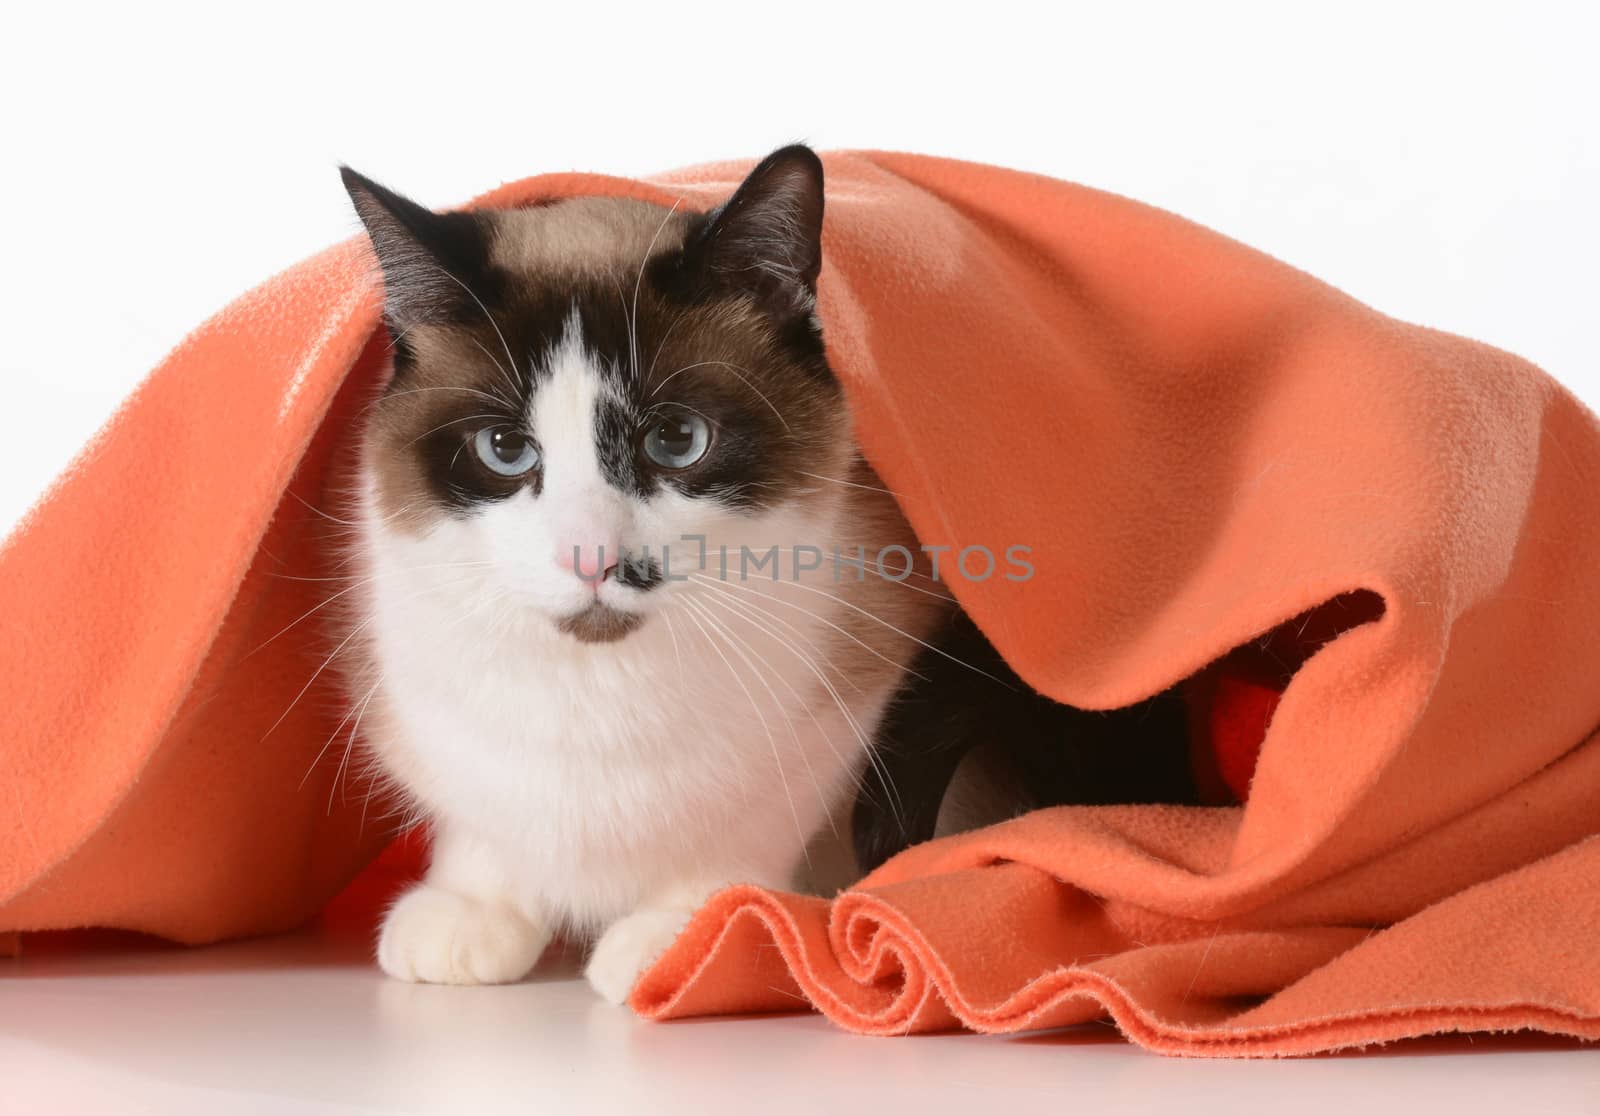 cat hiding under covers - ragdoll sitting under orange blanket on white background - male